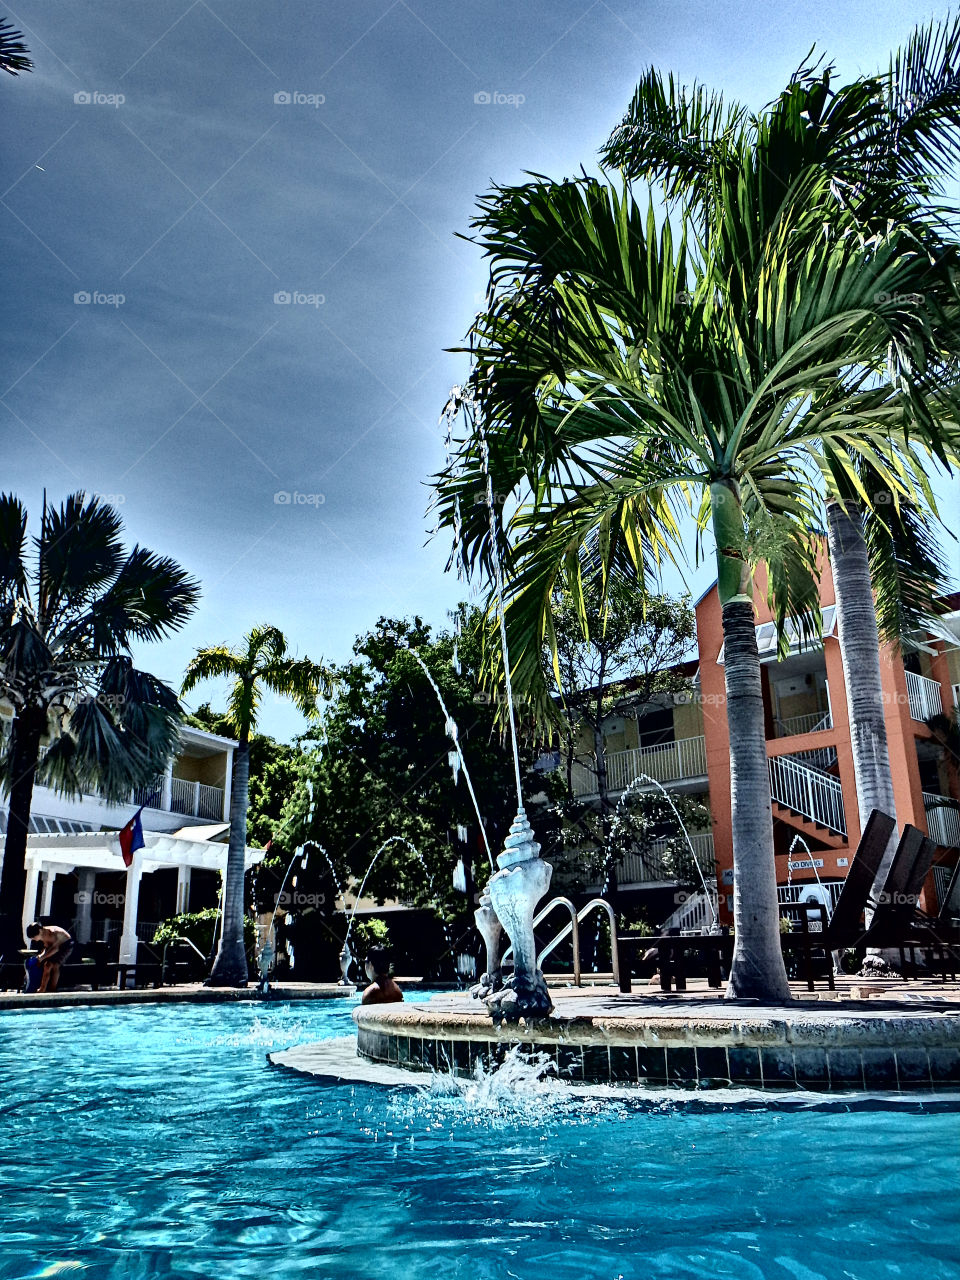 Key West pool